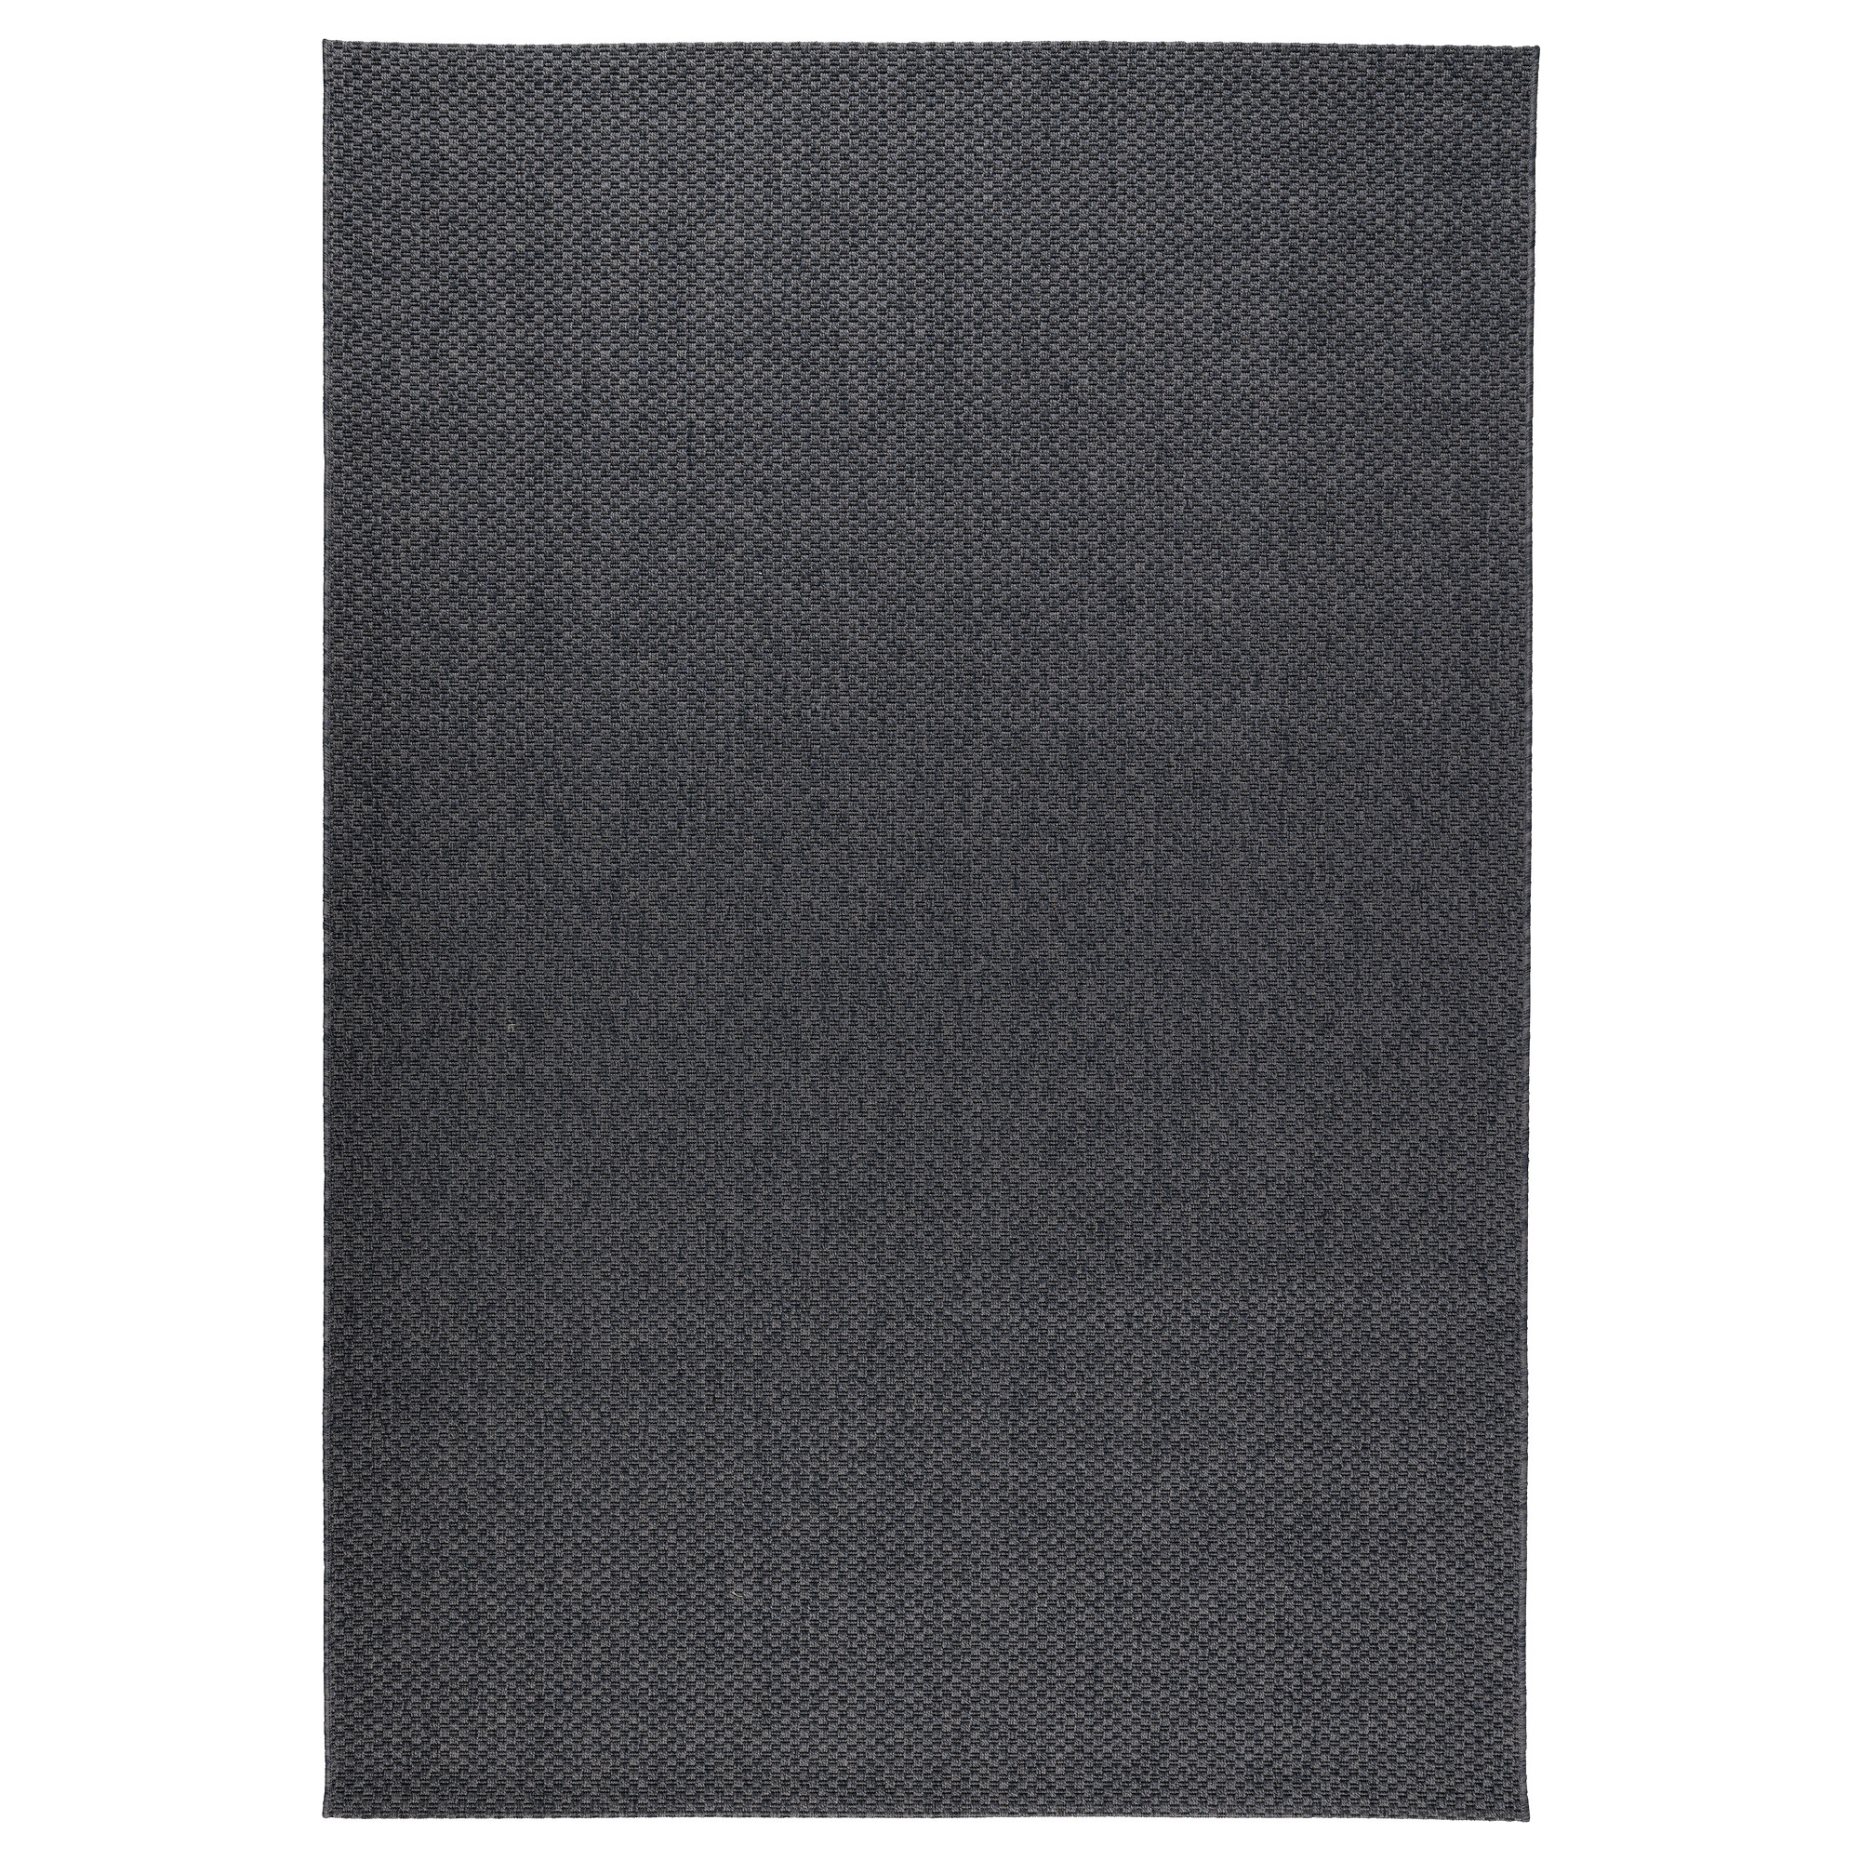 MORUM, χαλί χαμηλή πλέξη εσωτερικού/εξωτερικού χώρου, 160x230 cm, 402.035.57